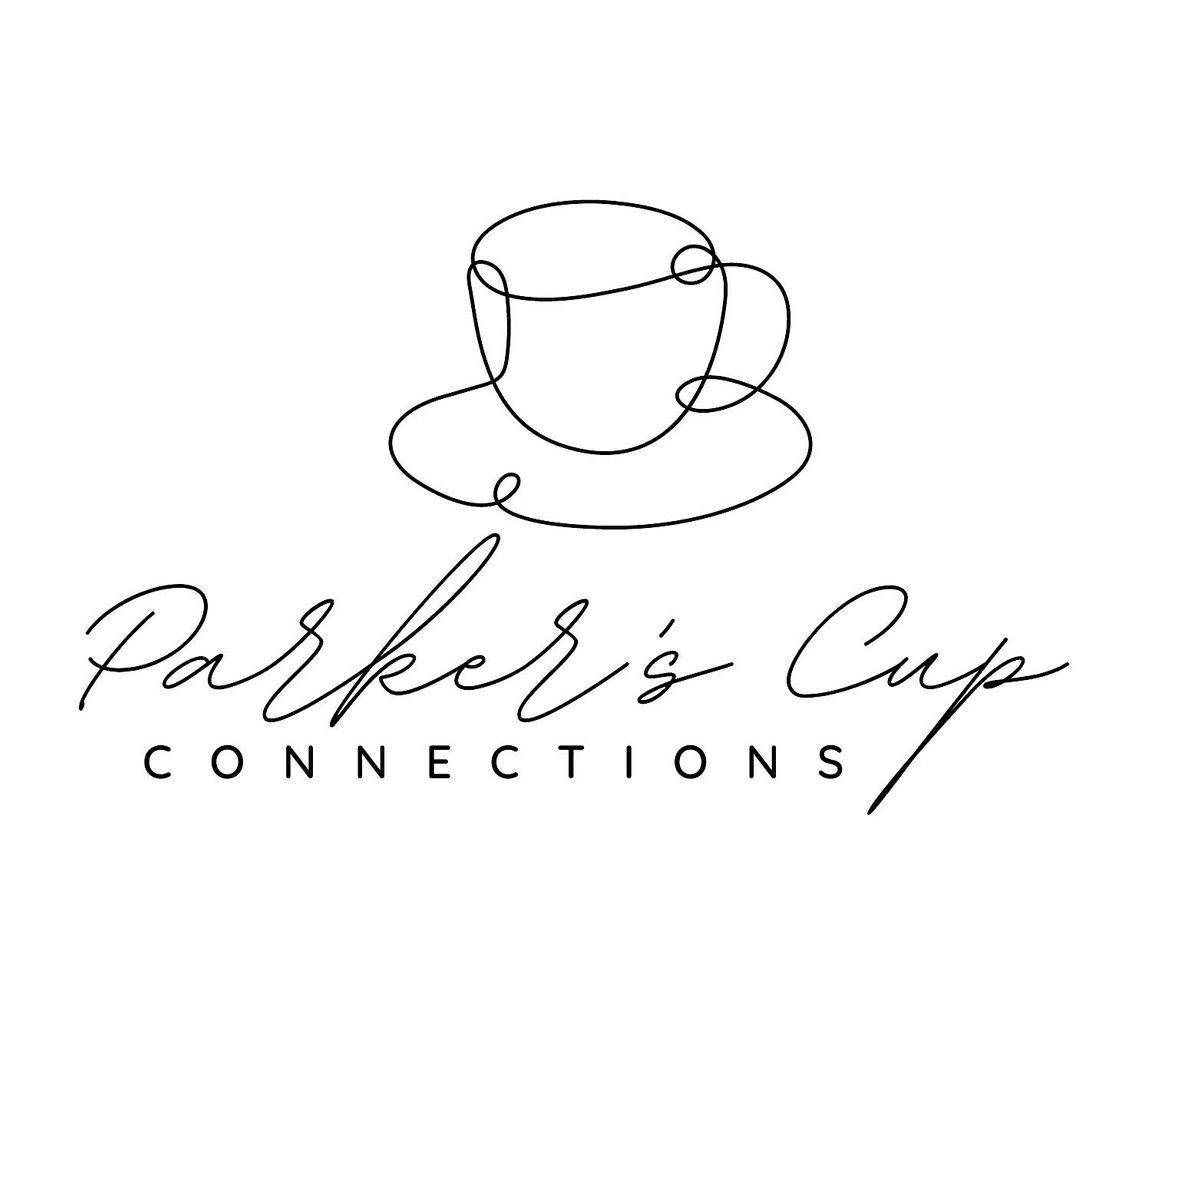 Parker's Cup Connections